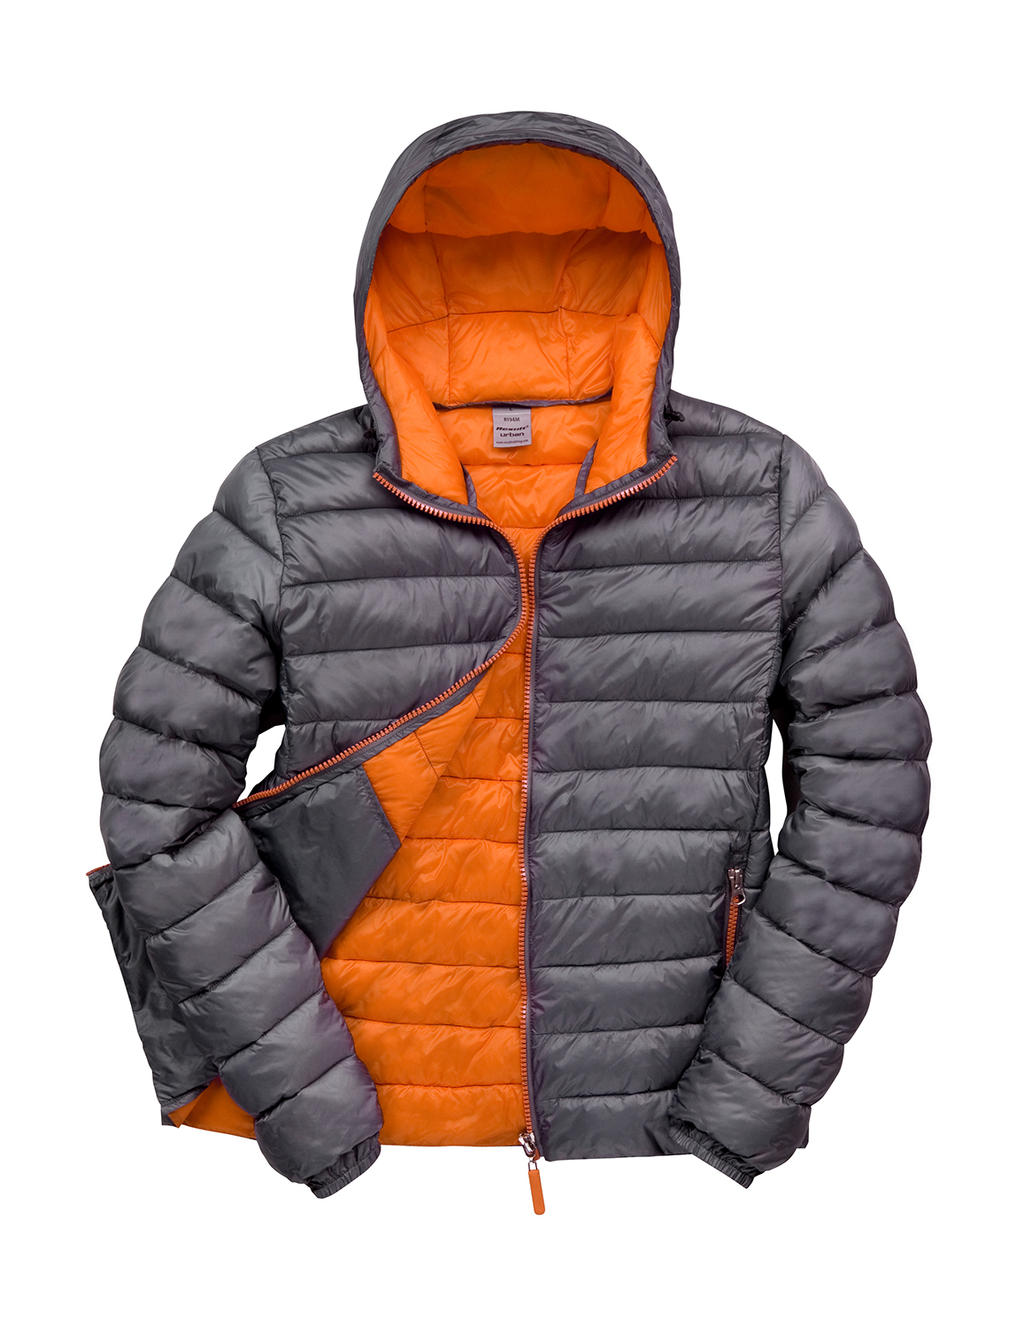  Snow Bird Hooded Jacket in Farbe Grey/Orange